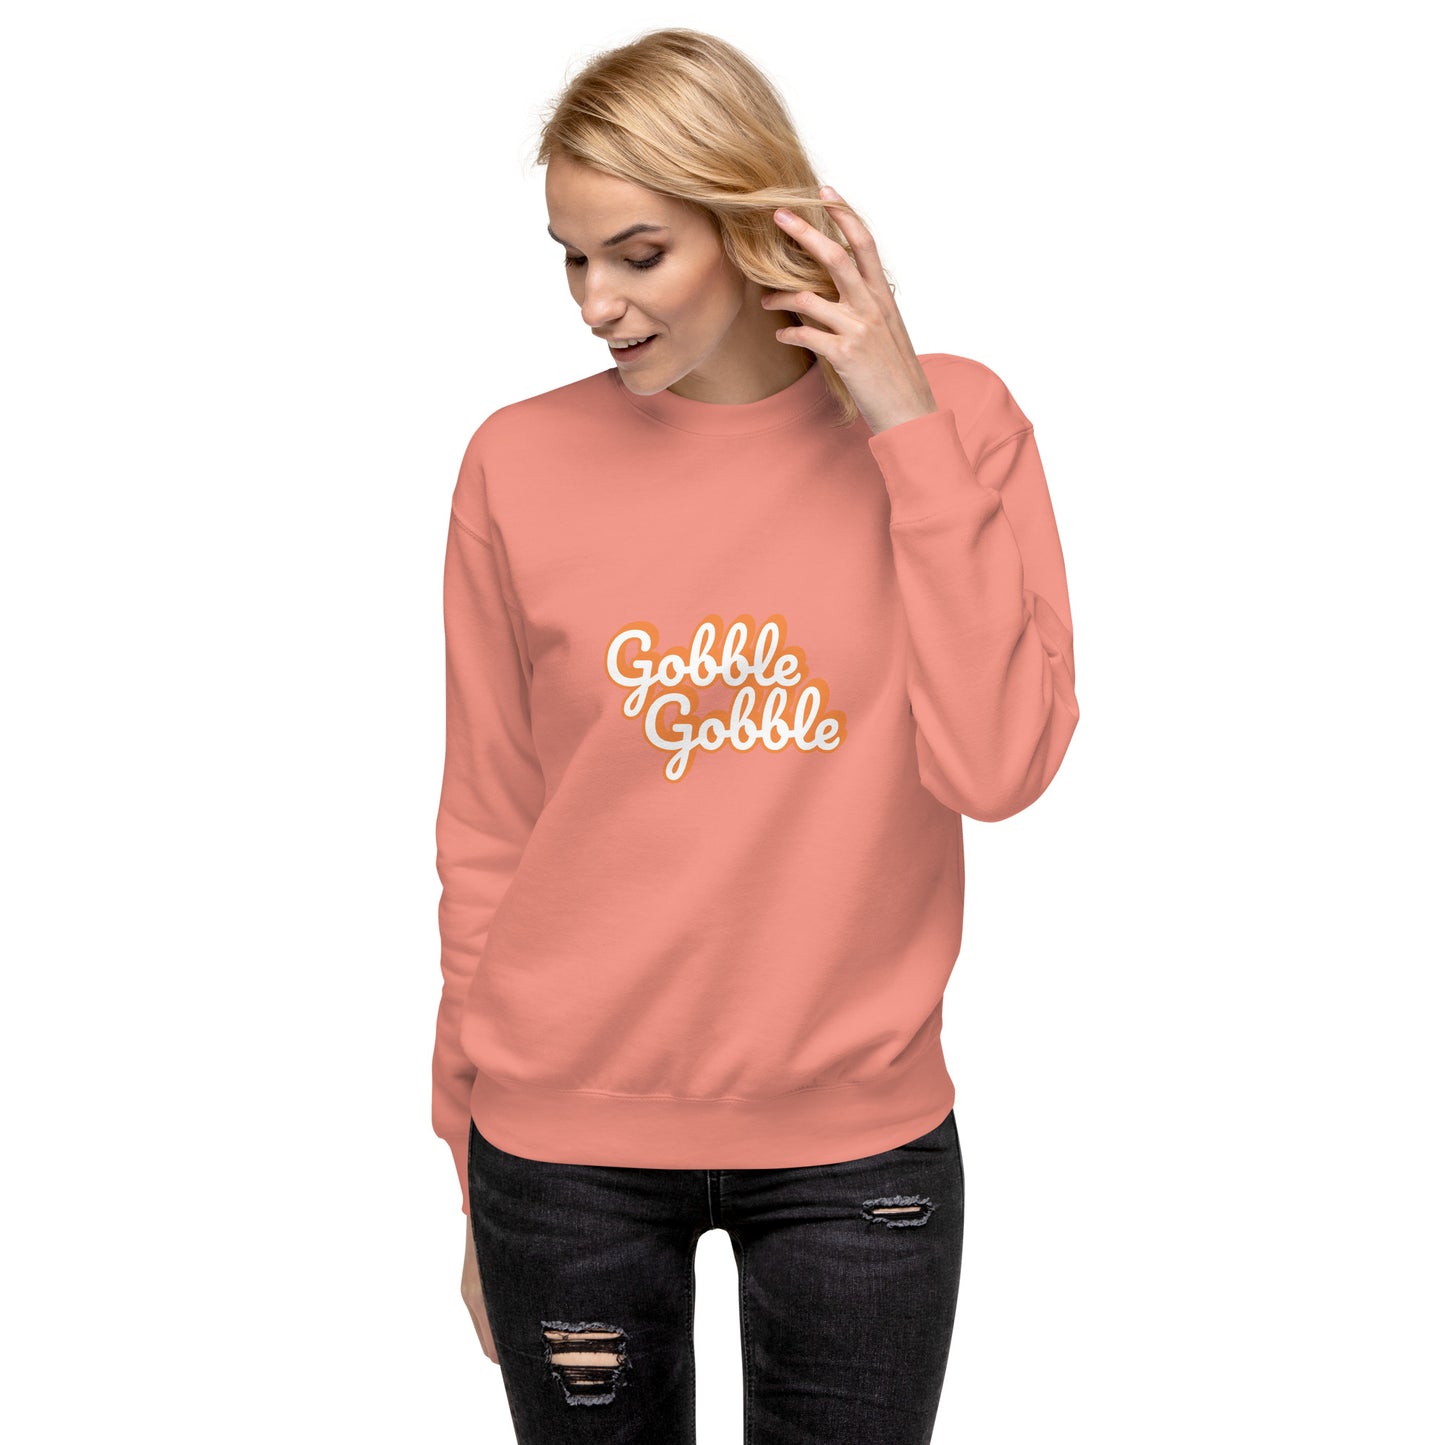 Gobble Gobble Unisex Premium Sweatshirt